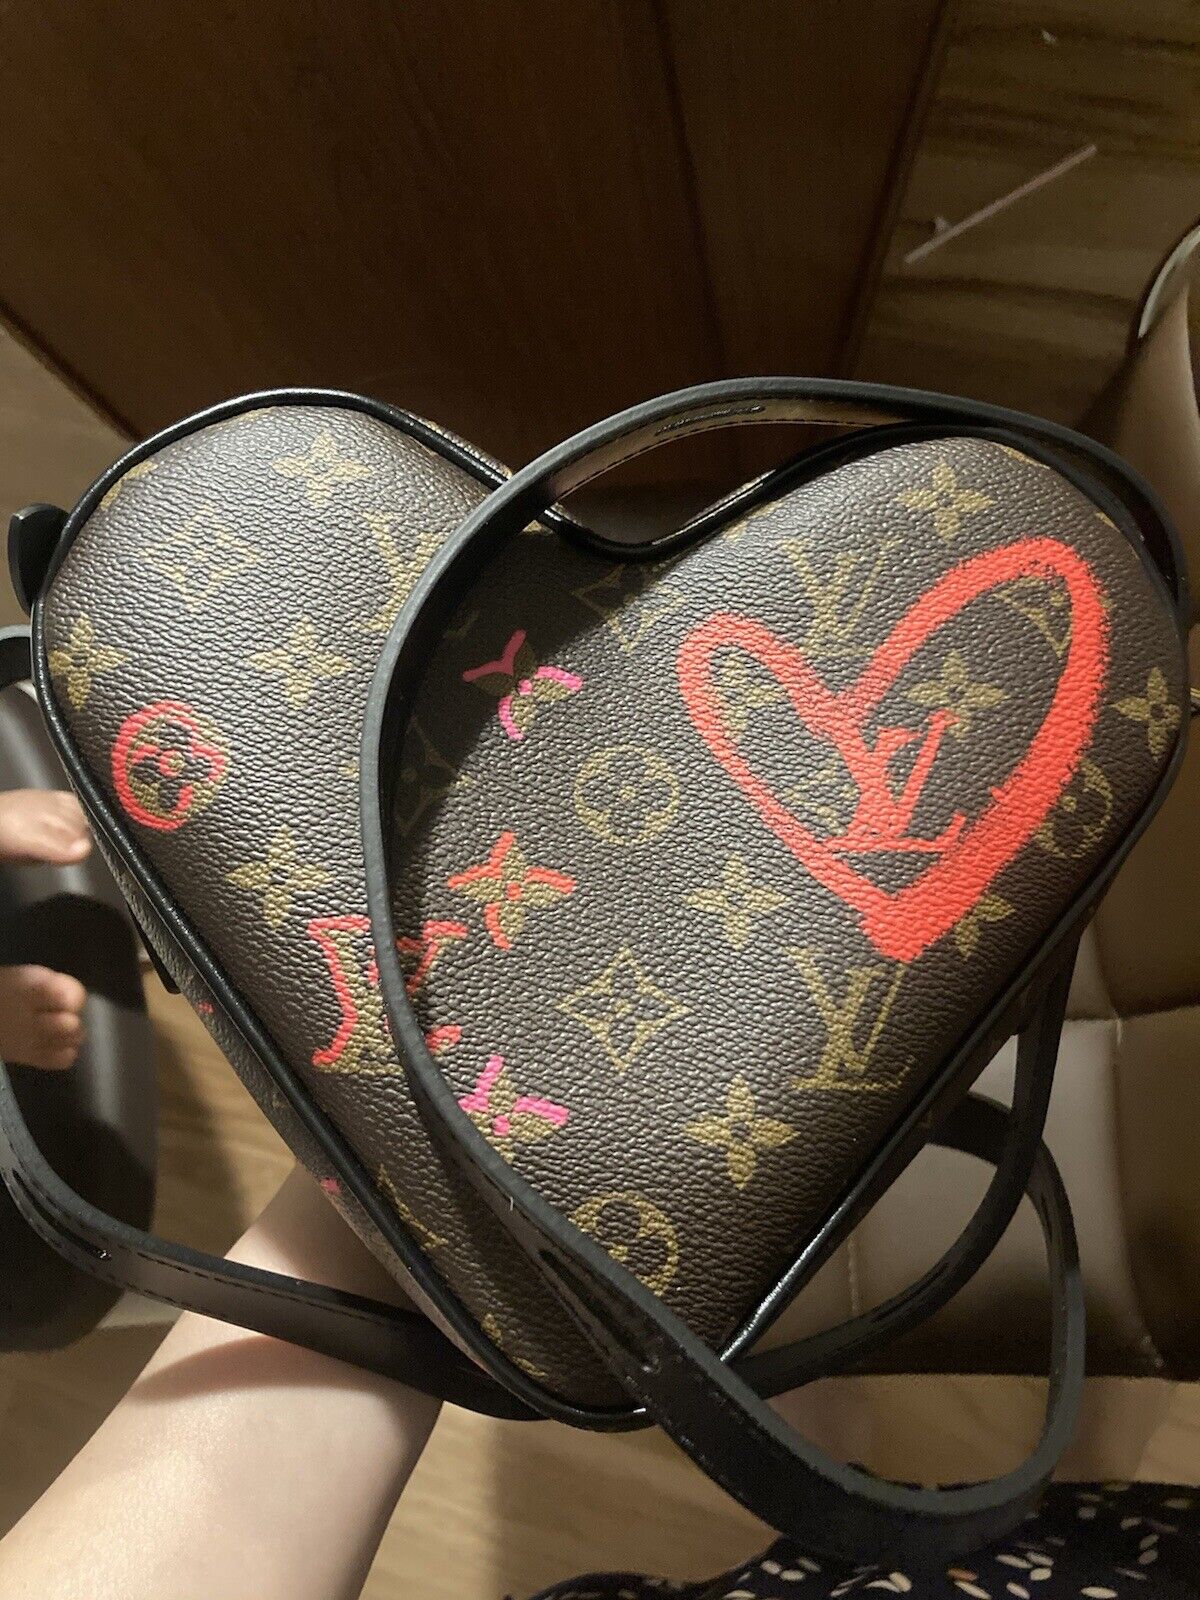 lv pink heart purse